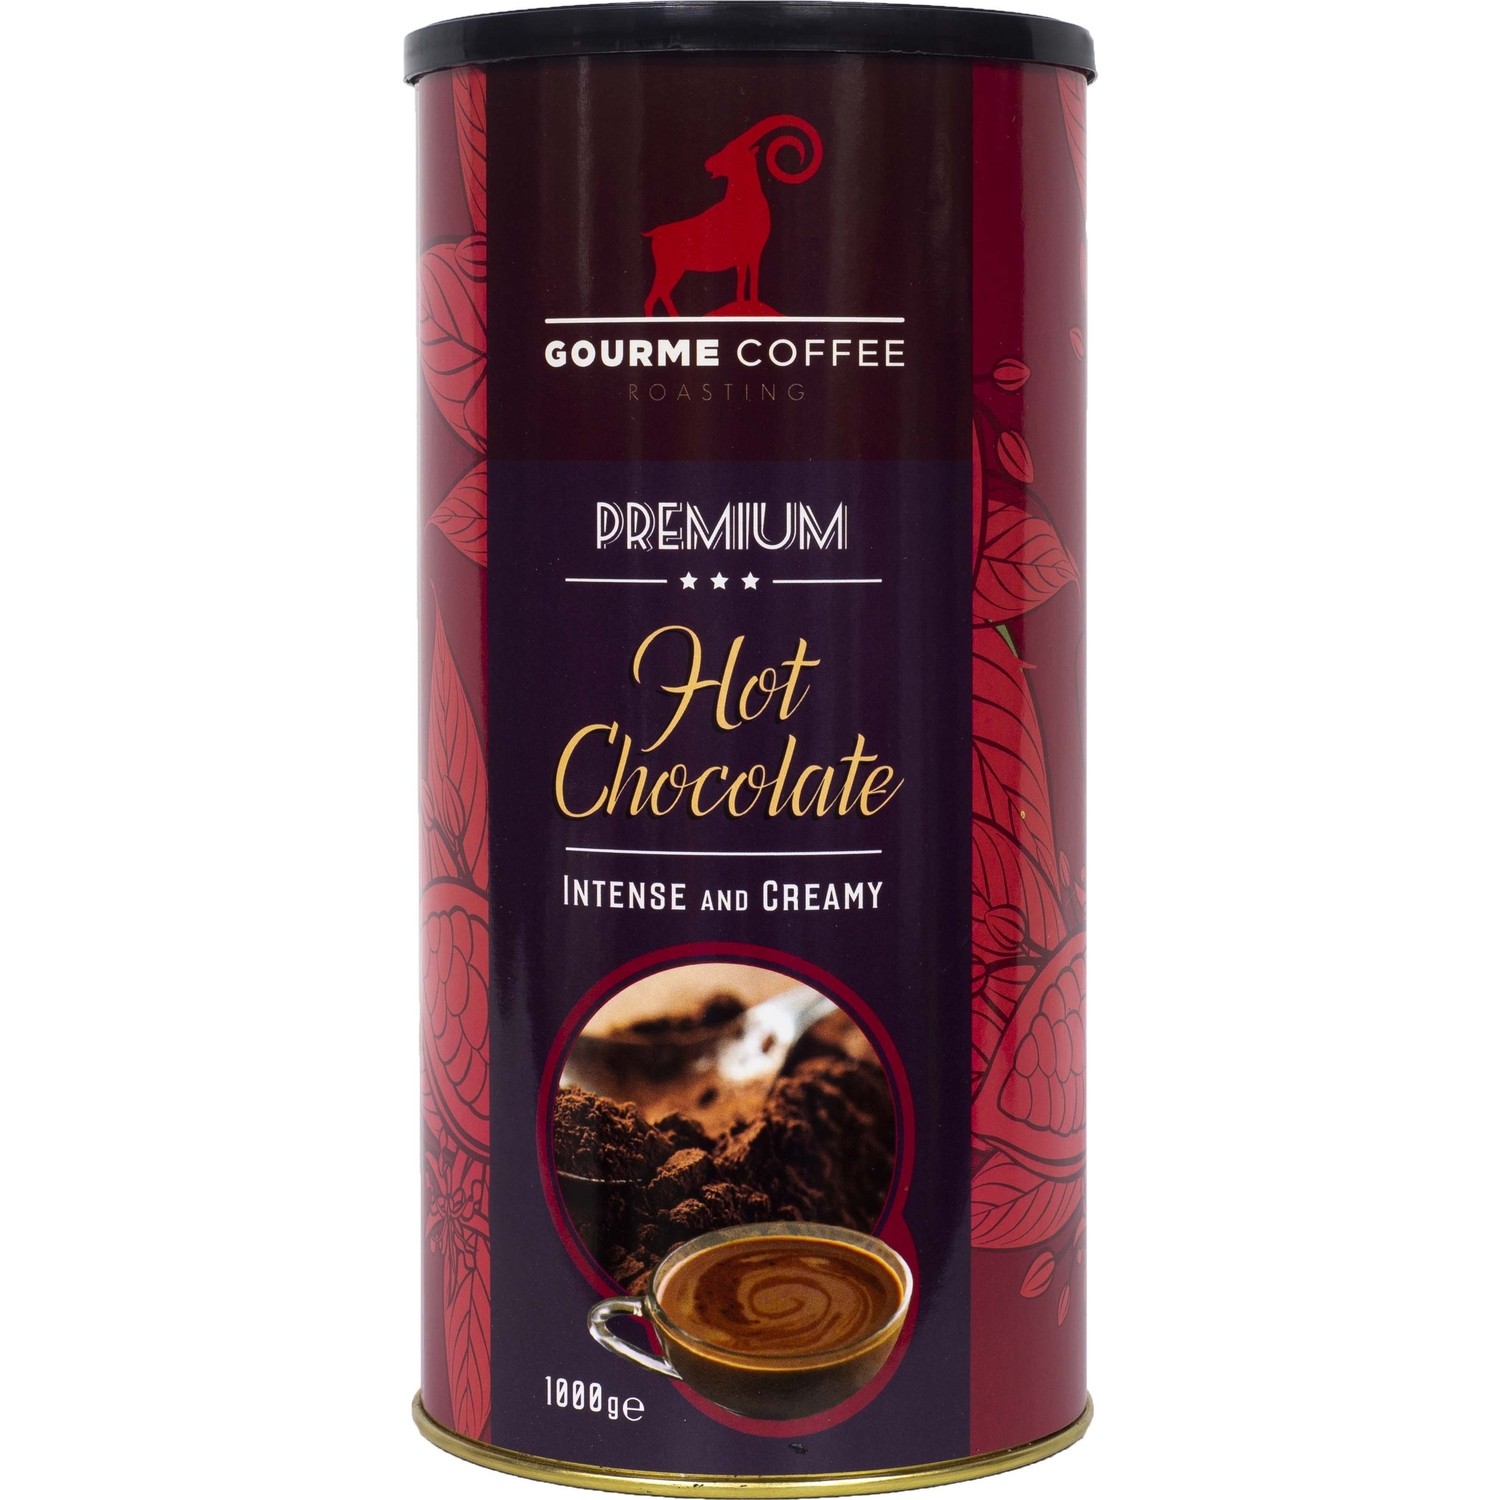 Gourme Coffee Roasting Sıcak Çikolata 1 kg Fiyatı